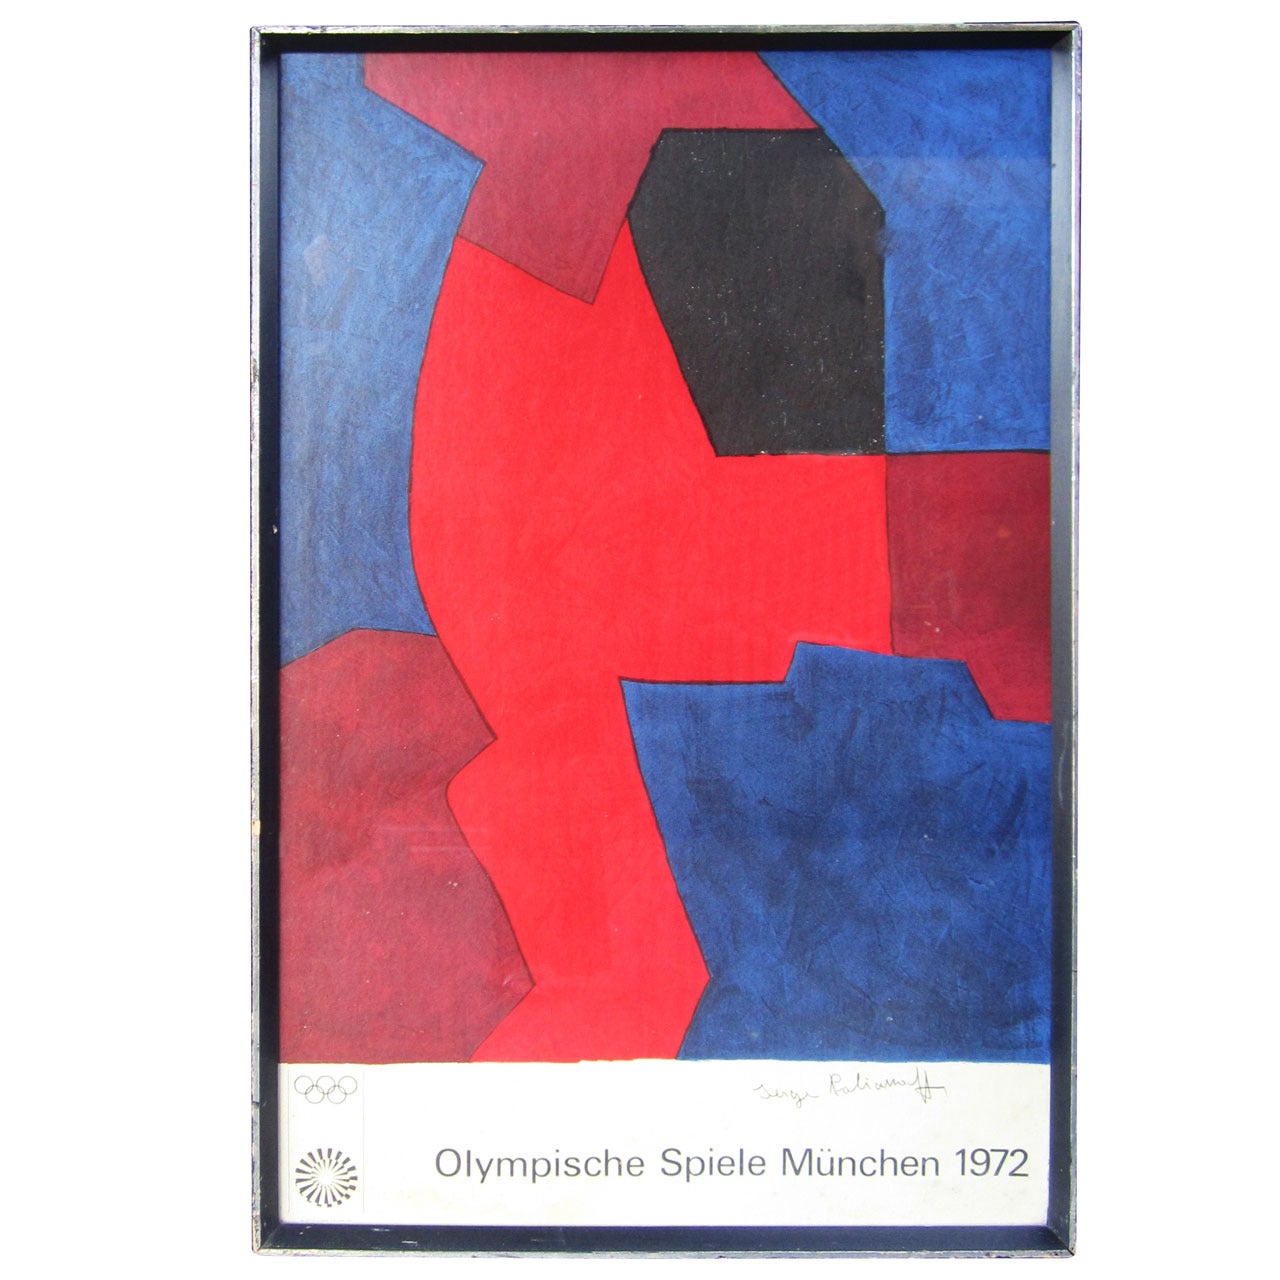 1972 Munich Olympics Art Series Original Lithographic Poster by Serge Poliakoff